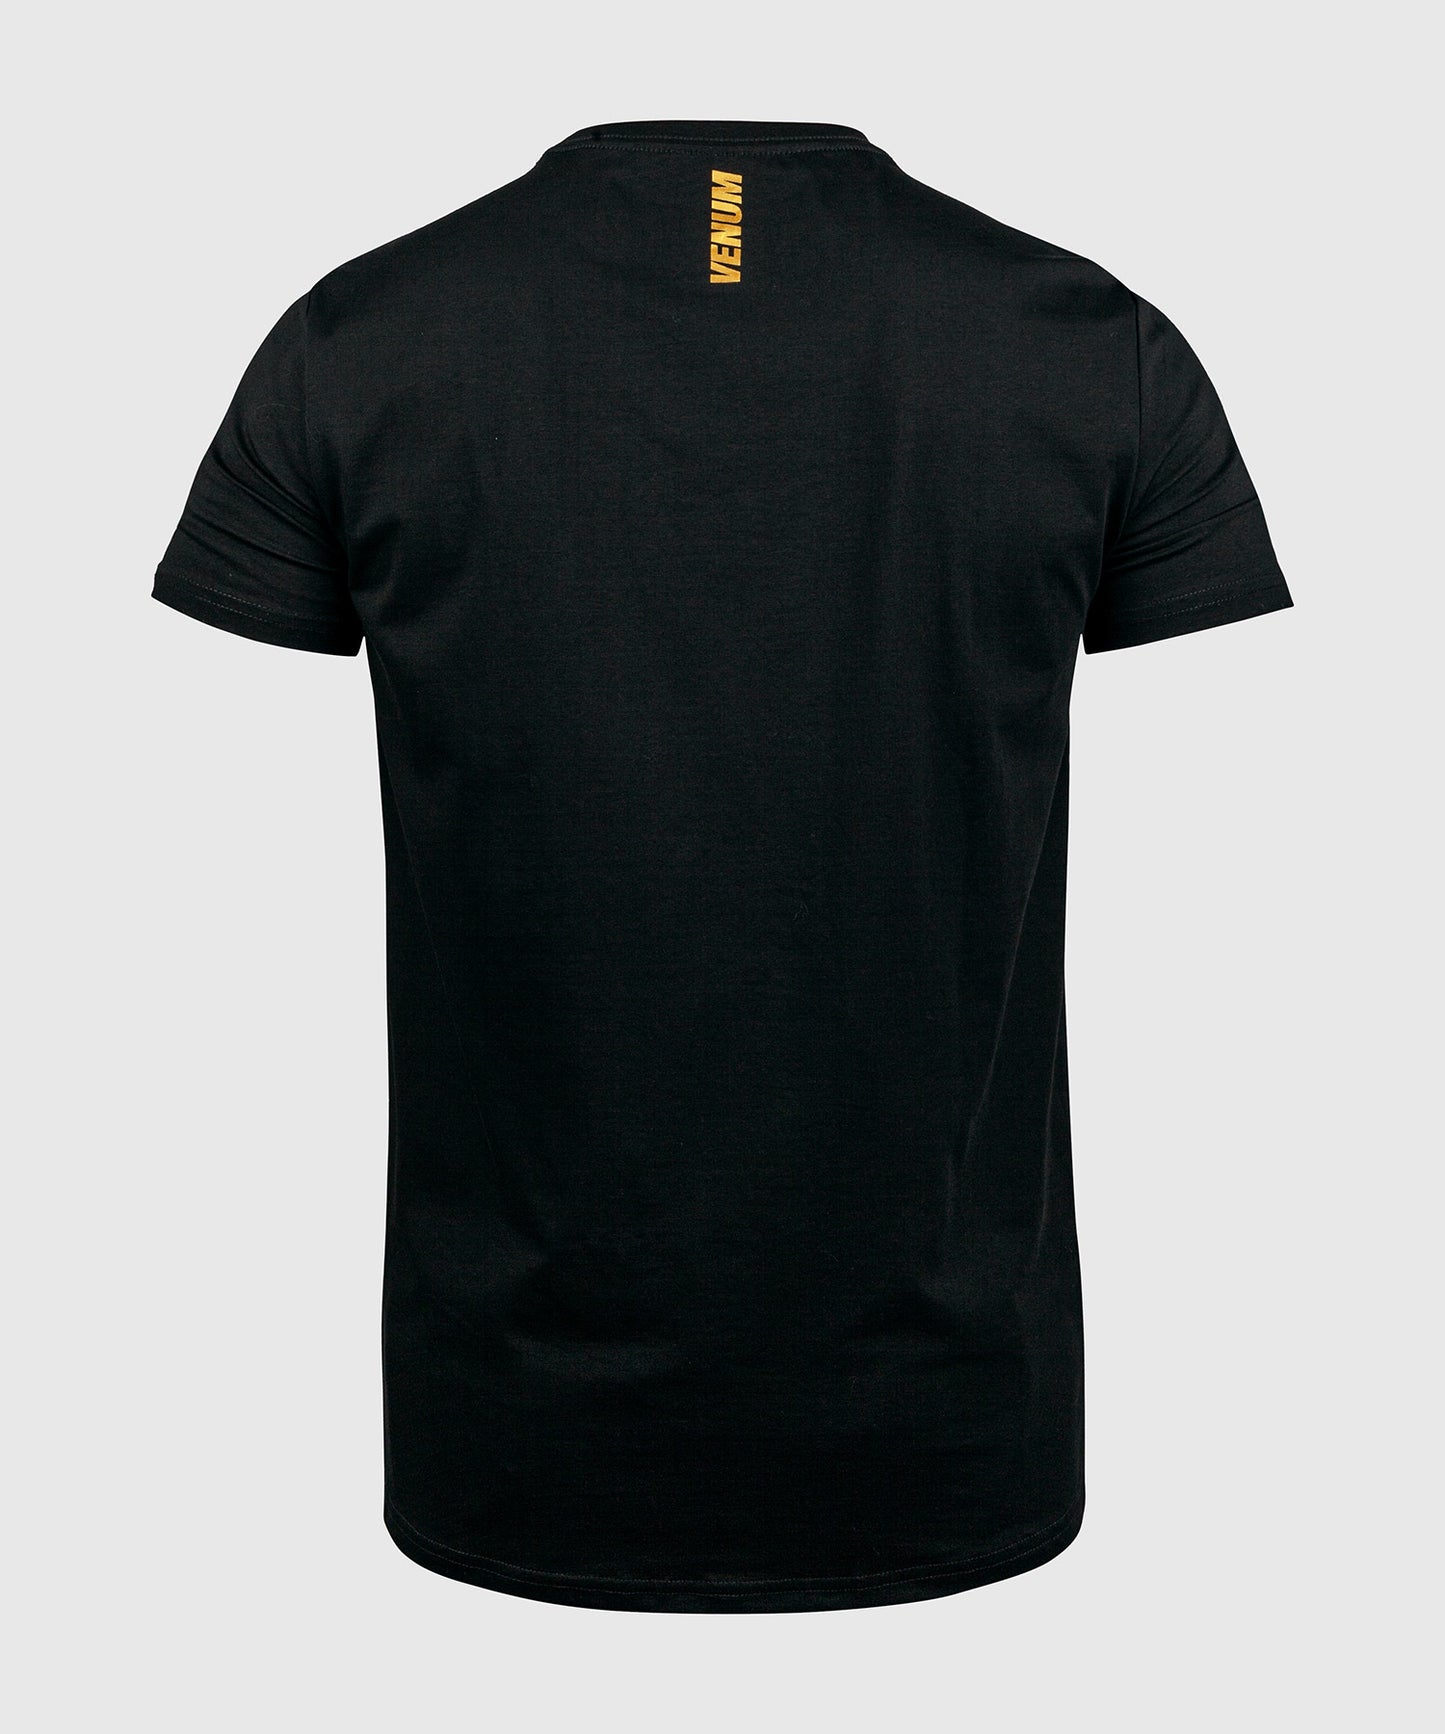 Venum JiuJitsu VT T-shirt - Black/Gold